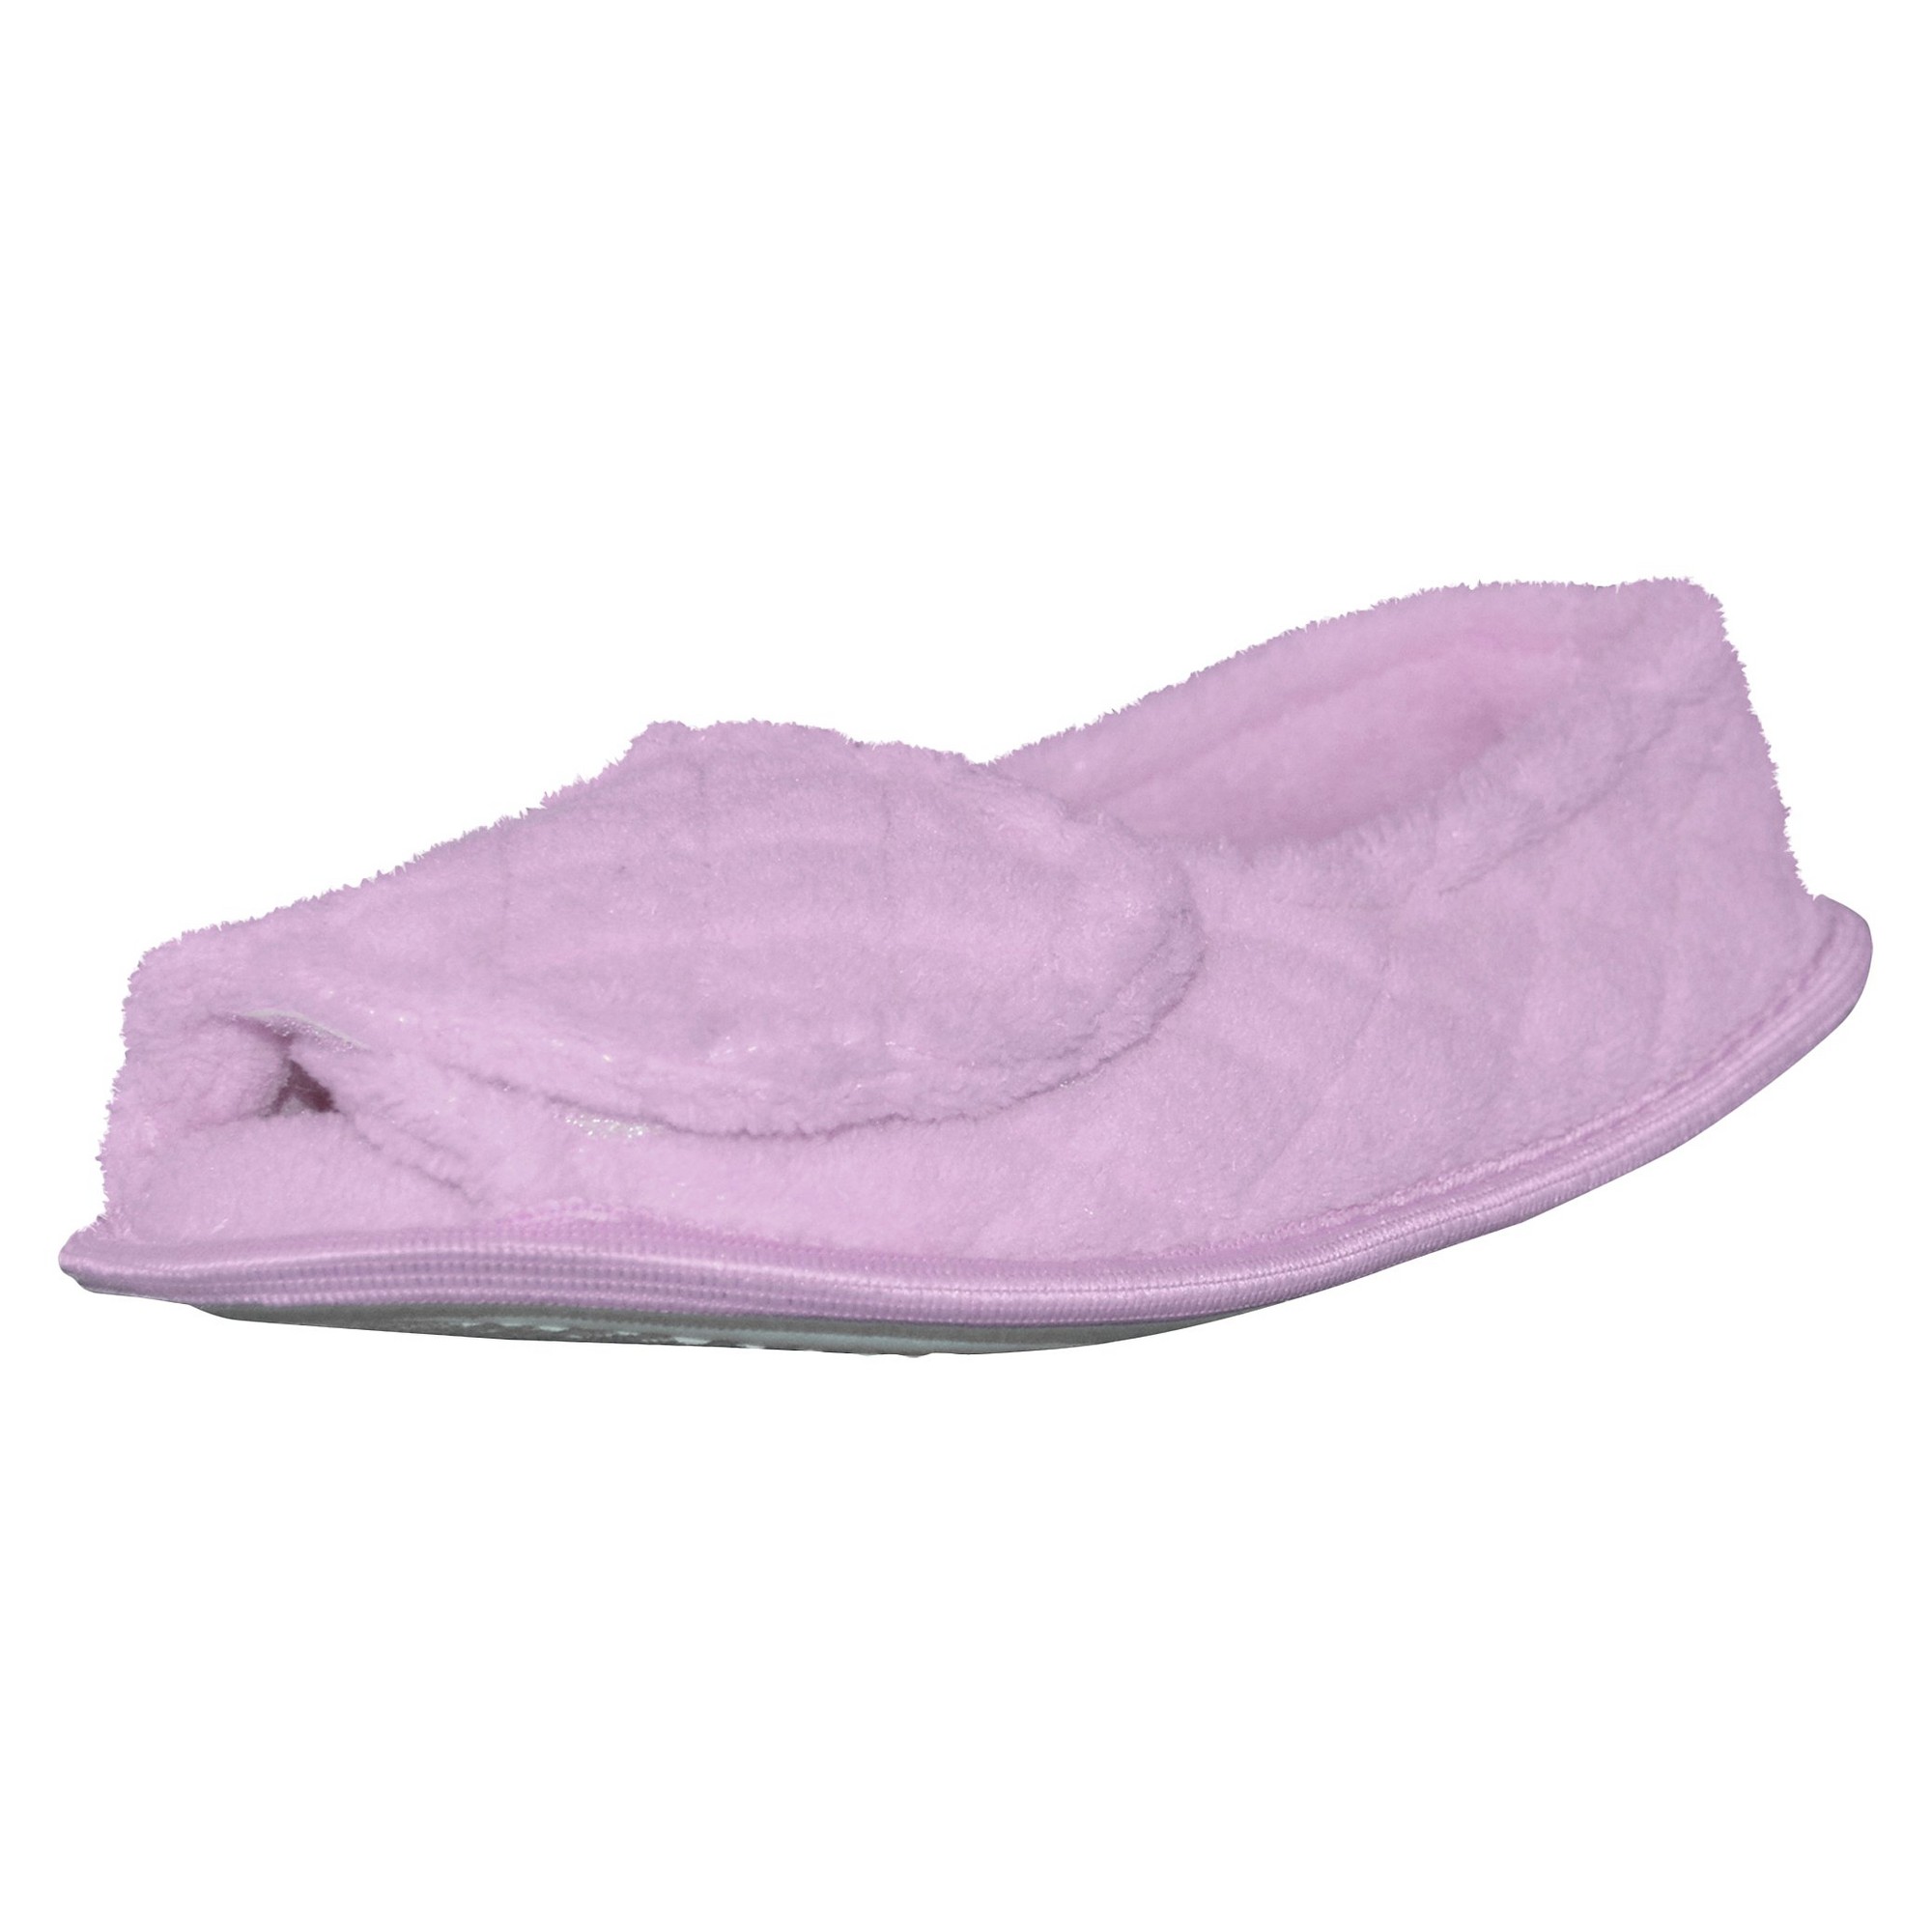 Women's MUK LUKS Micro Chenille Slippers - Lavender L(8-9), Size: Large (8-9), Purple